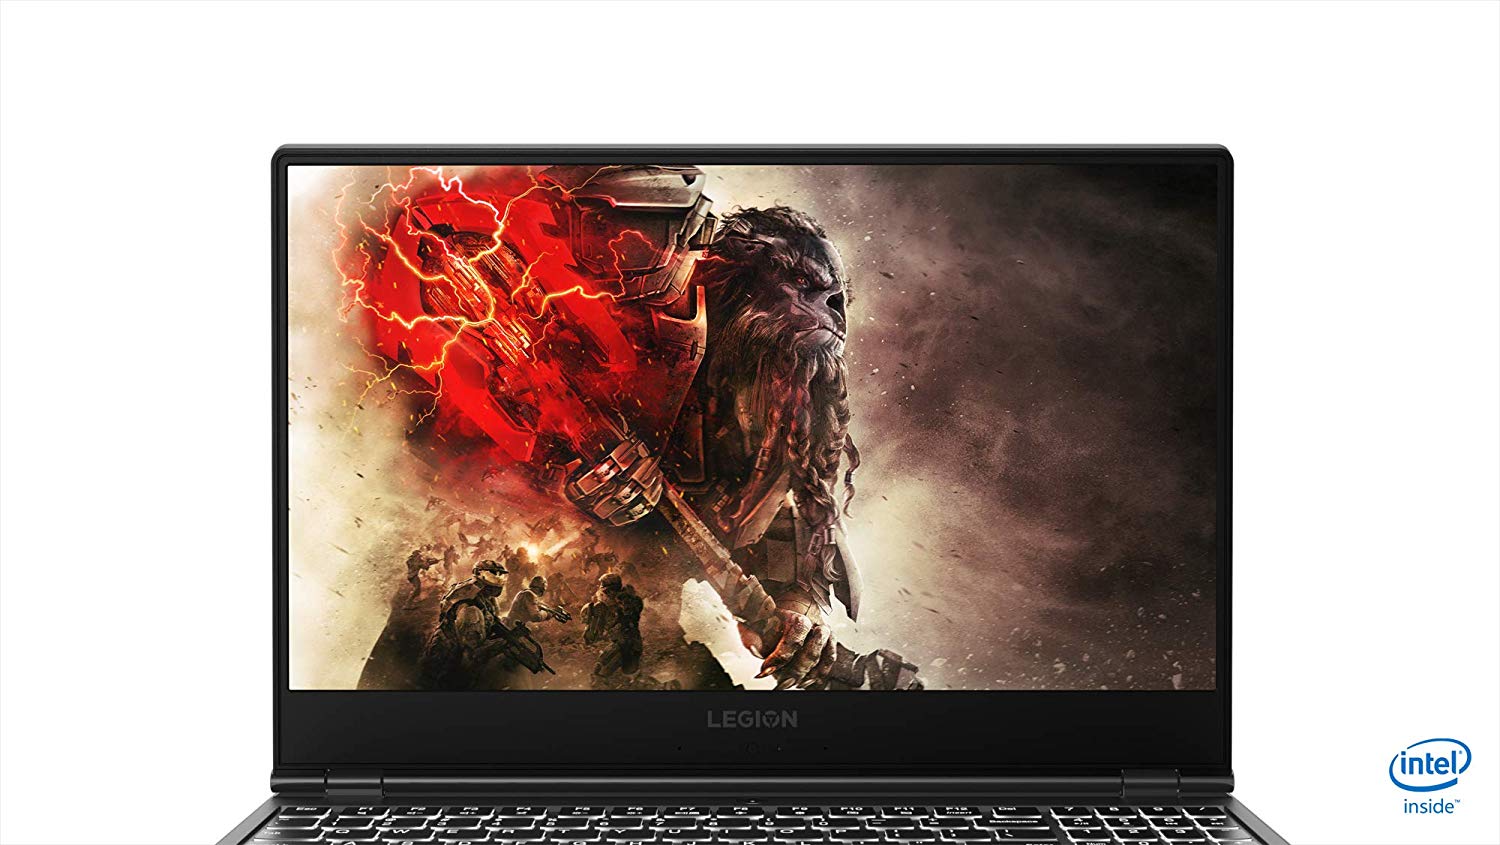 Lenovo Legion Y530 Intel Core I7 8th Gen 15.6 - inch Gaming FHD Laptop (8GB/ 1TB HDD +128GB SSD/ Windows 10 Home/ 4GB Graphics/ Black), 81FV00KNIN